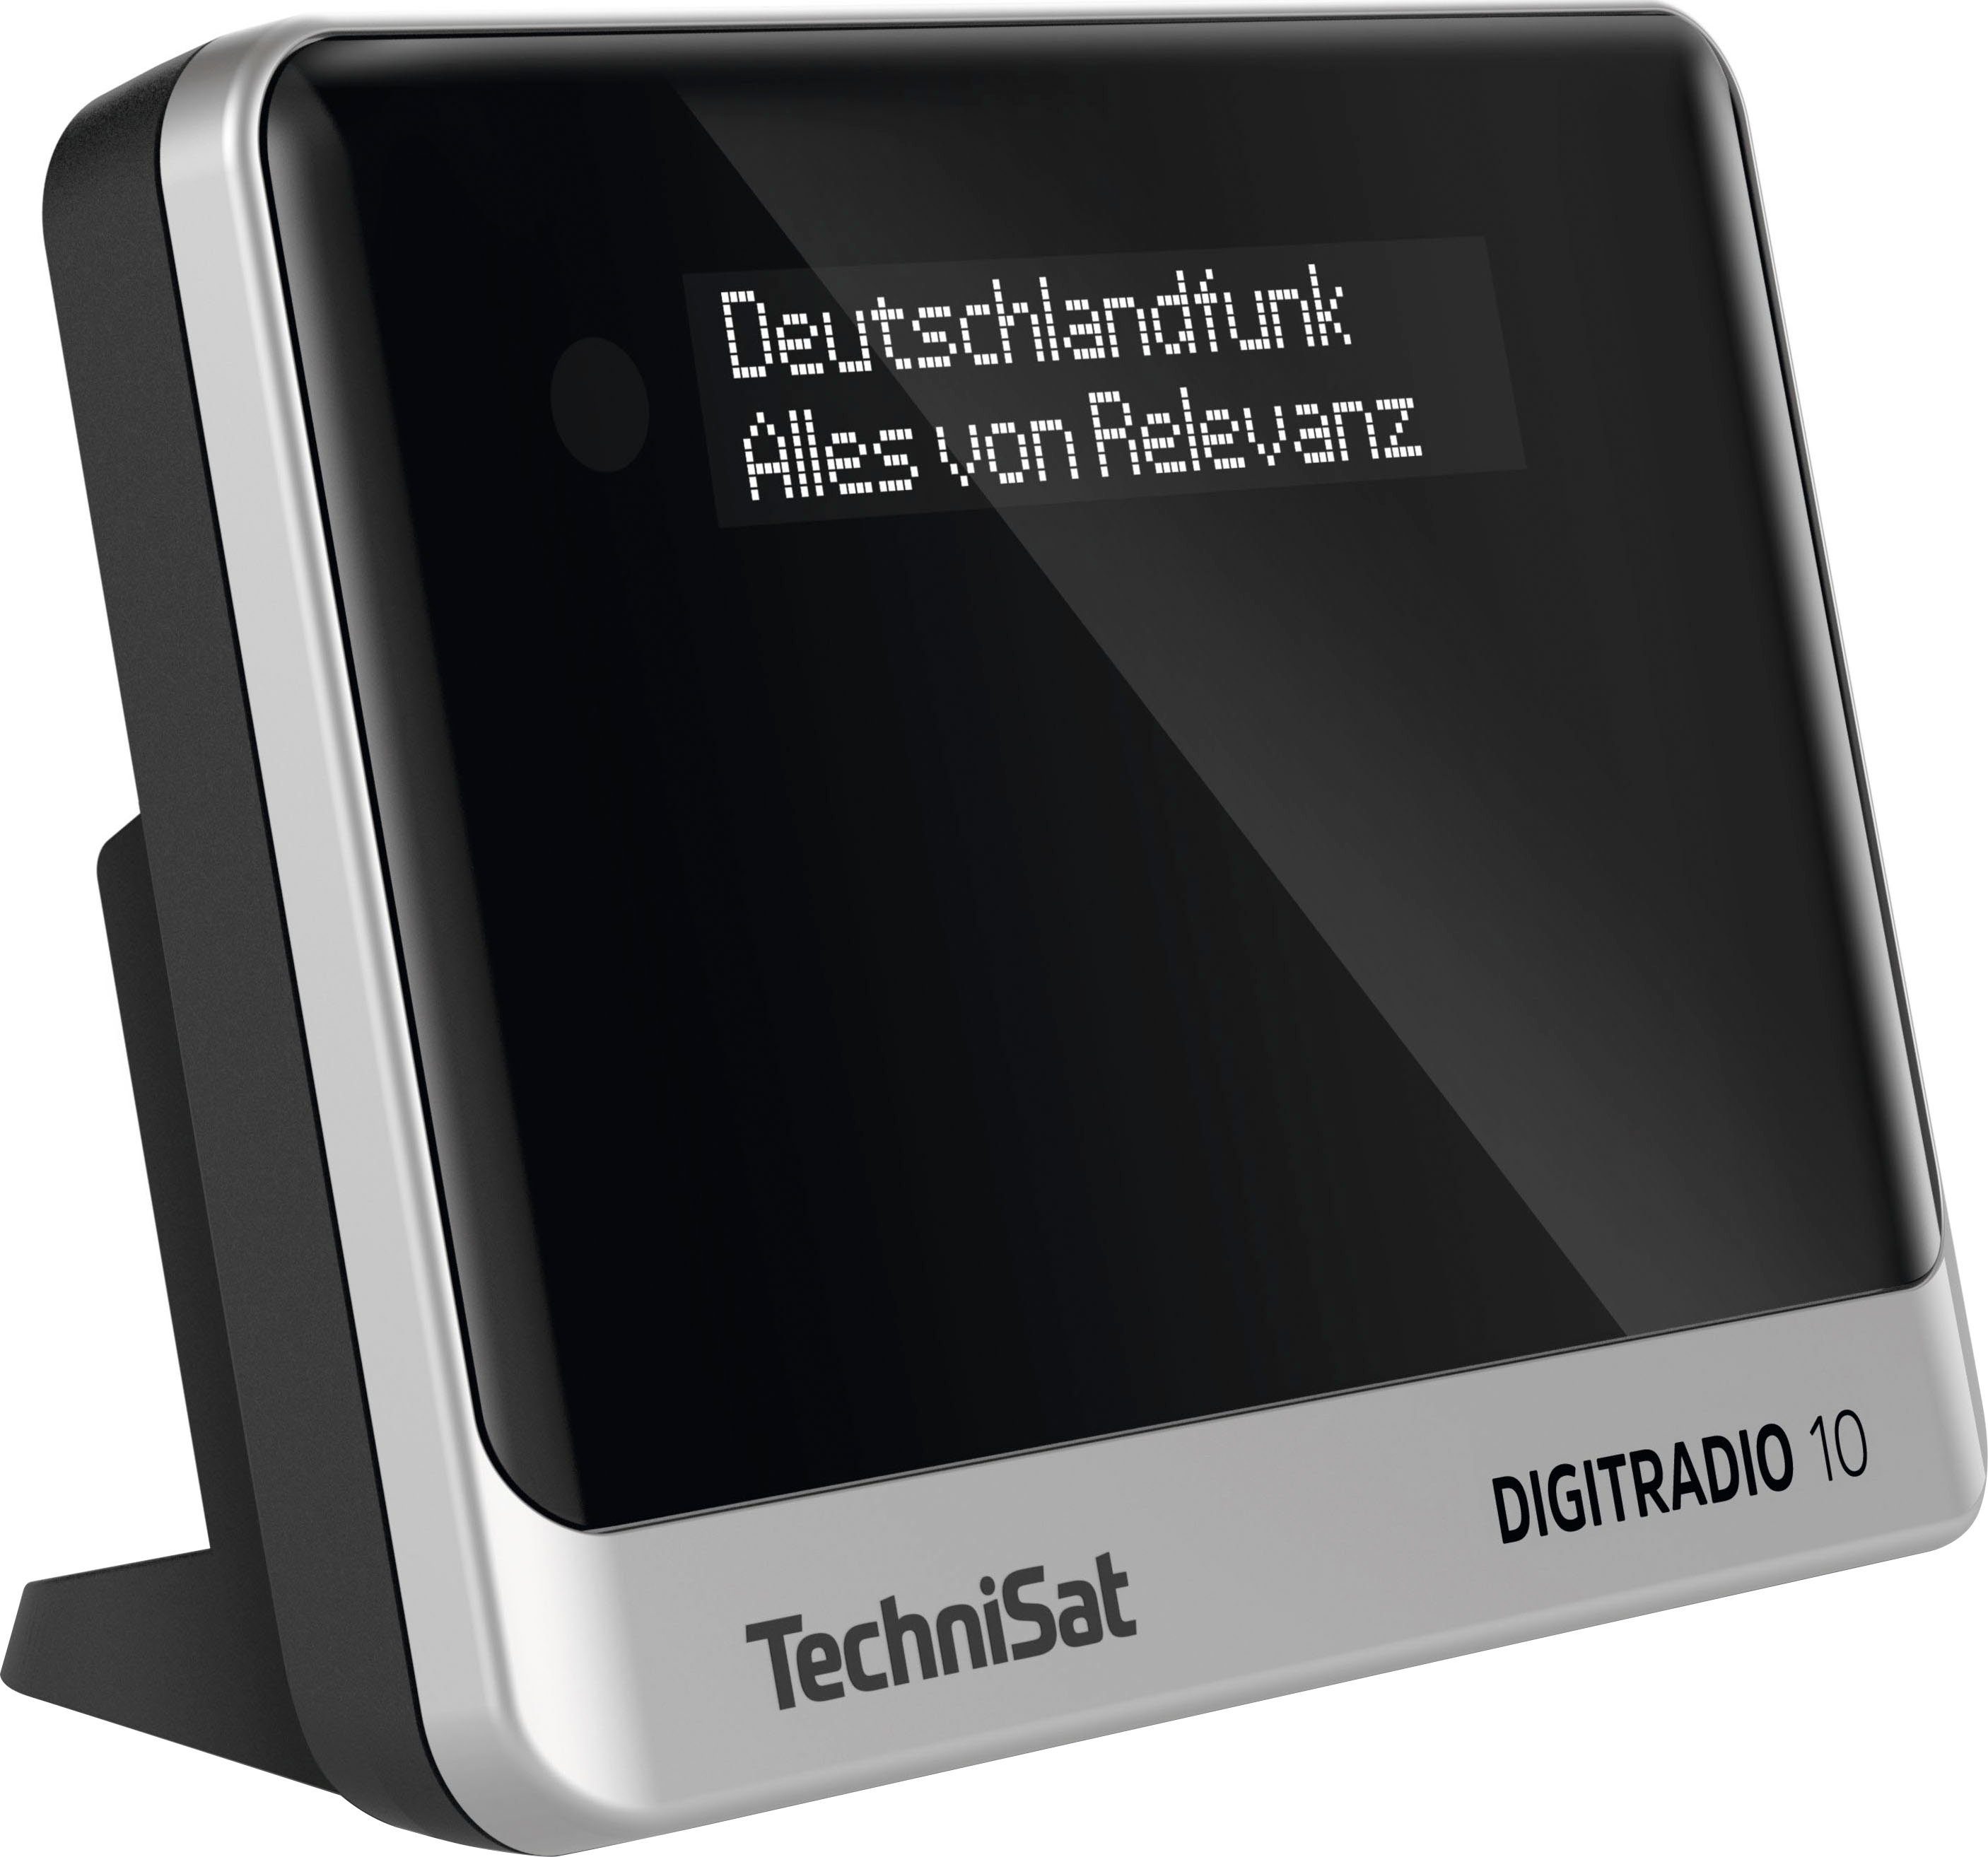 TechniSat DIGITRADIO 10 Digitalradio (DAB) (UKW RDS) mit